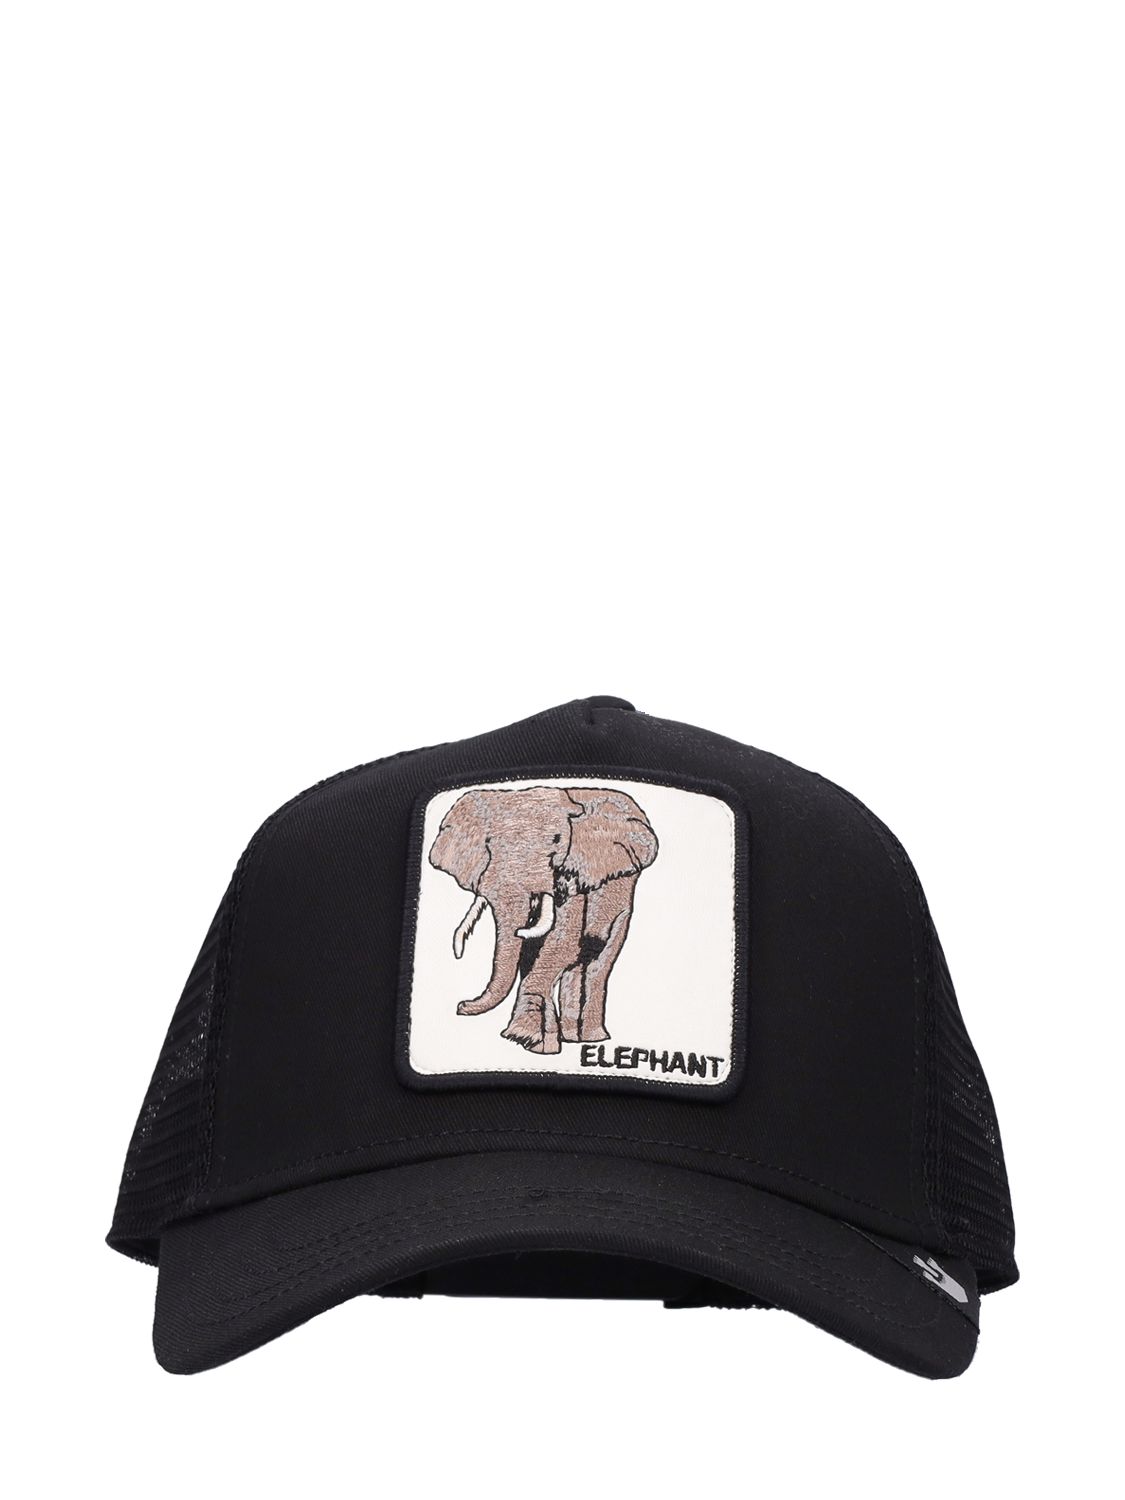 The Elephant Trucker Hat W/ Patch